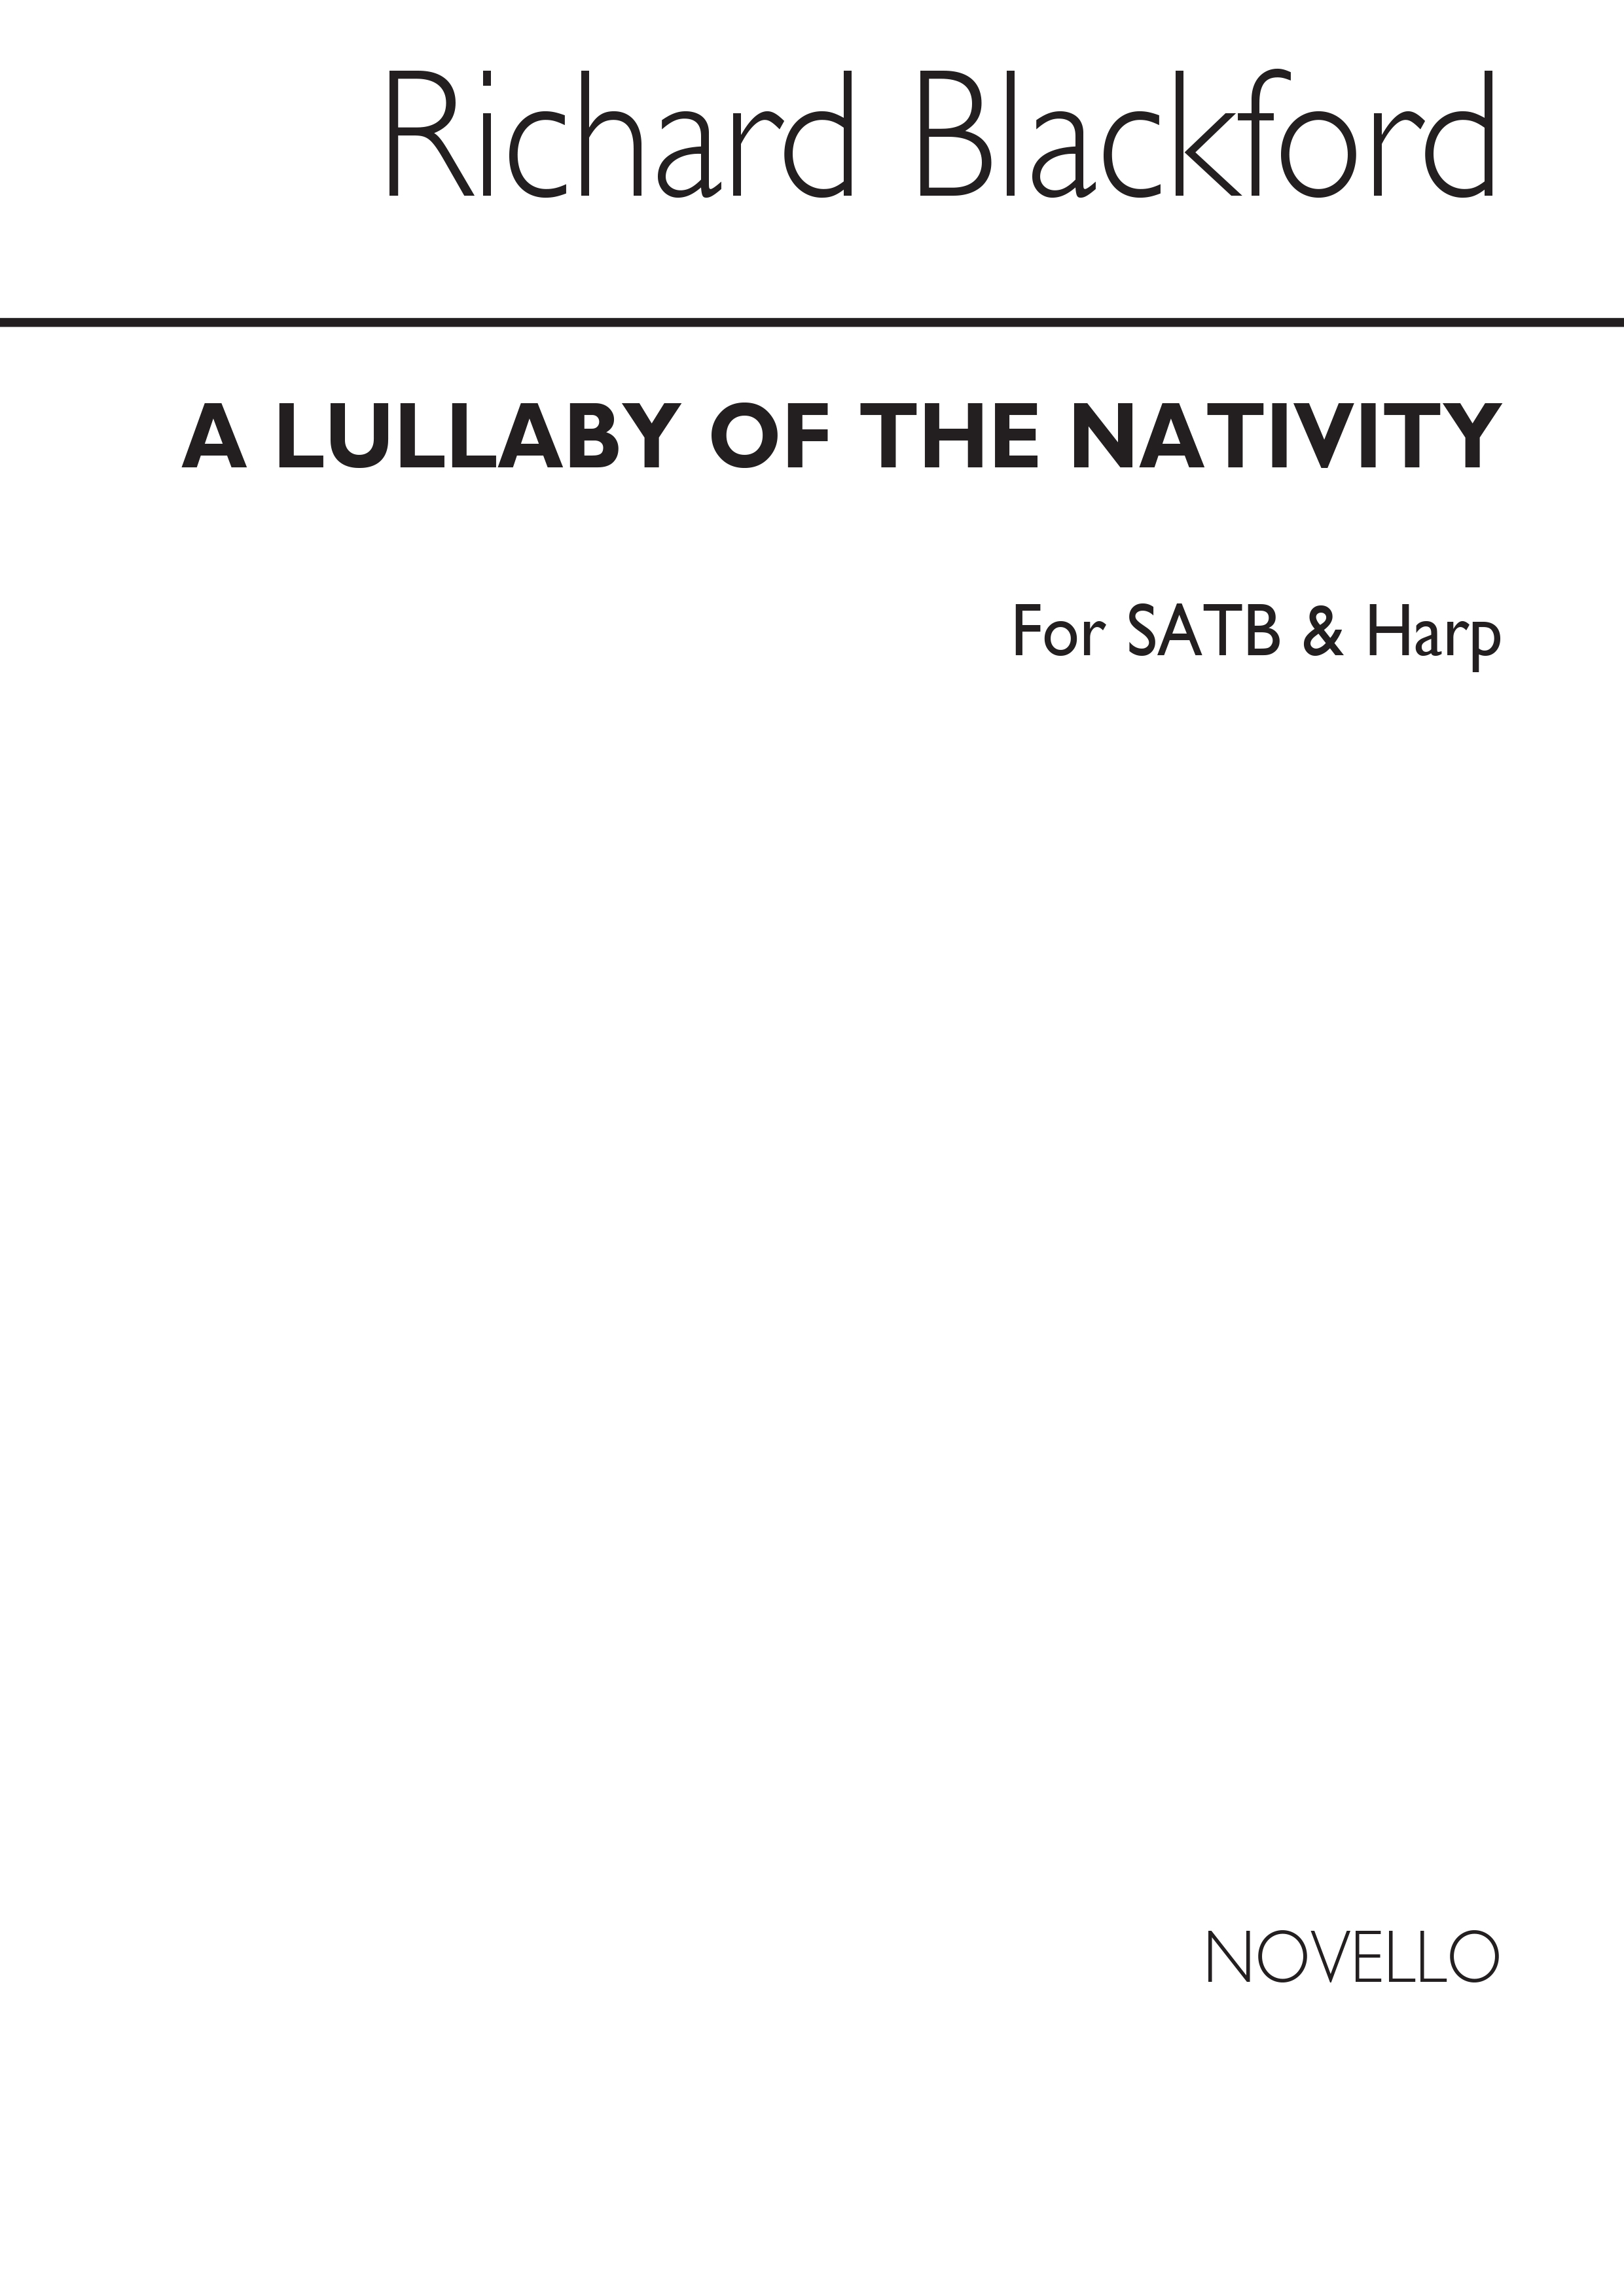 Richard Blackford: A Lullaby of The Nativity SATB HARP